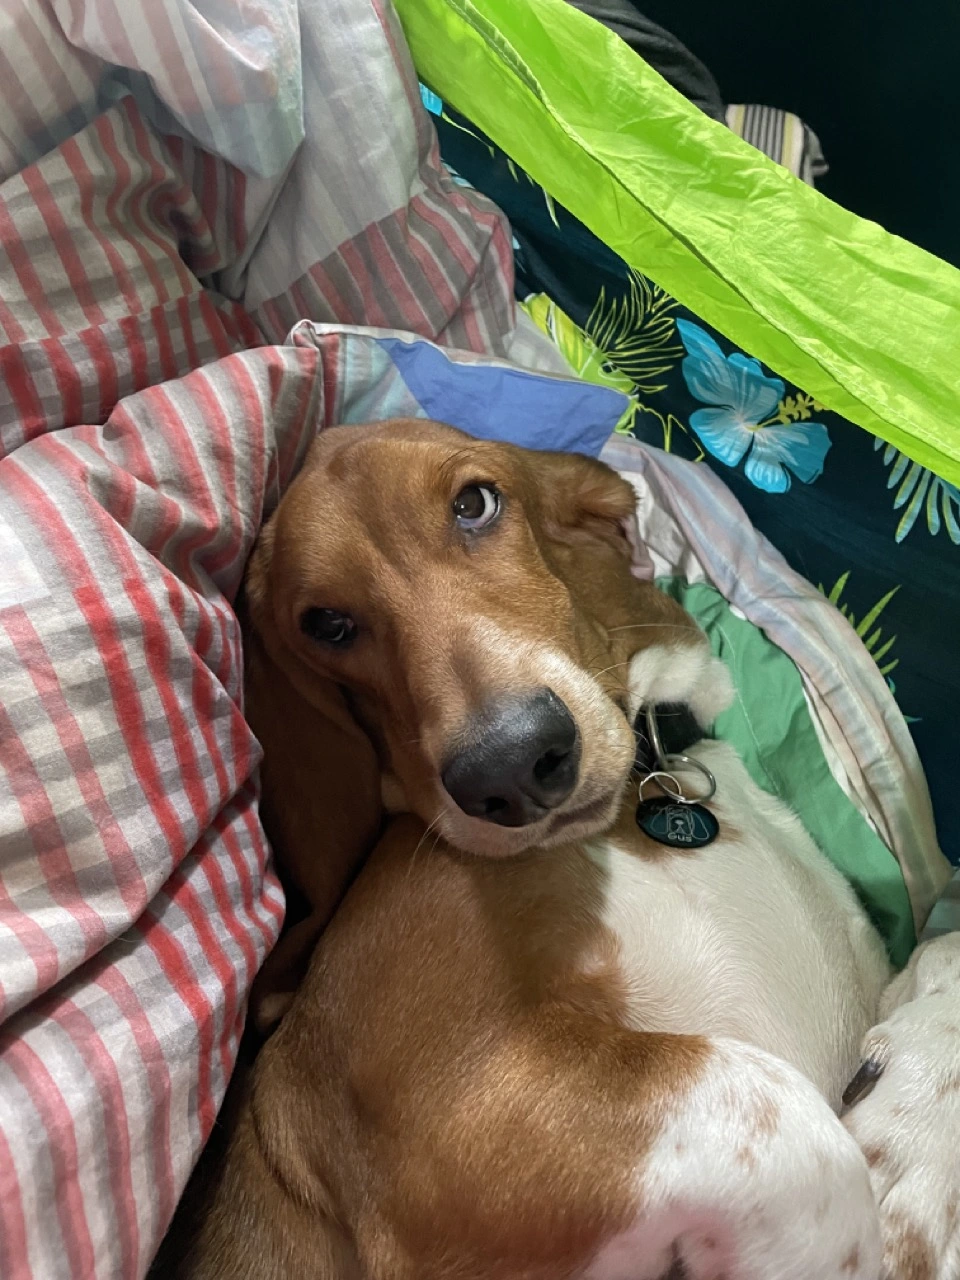 The basset hound in the hammock